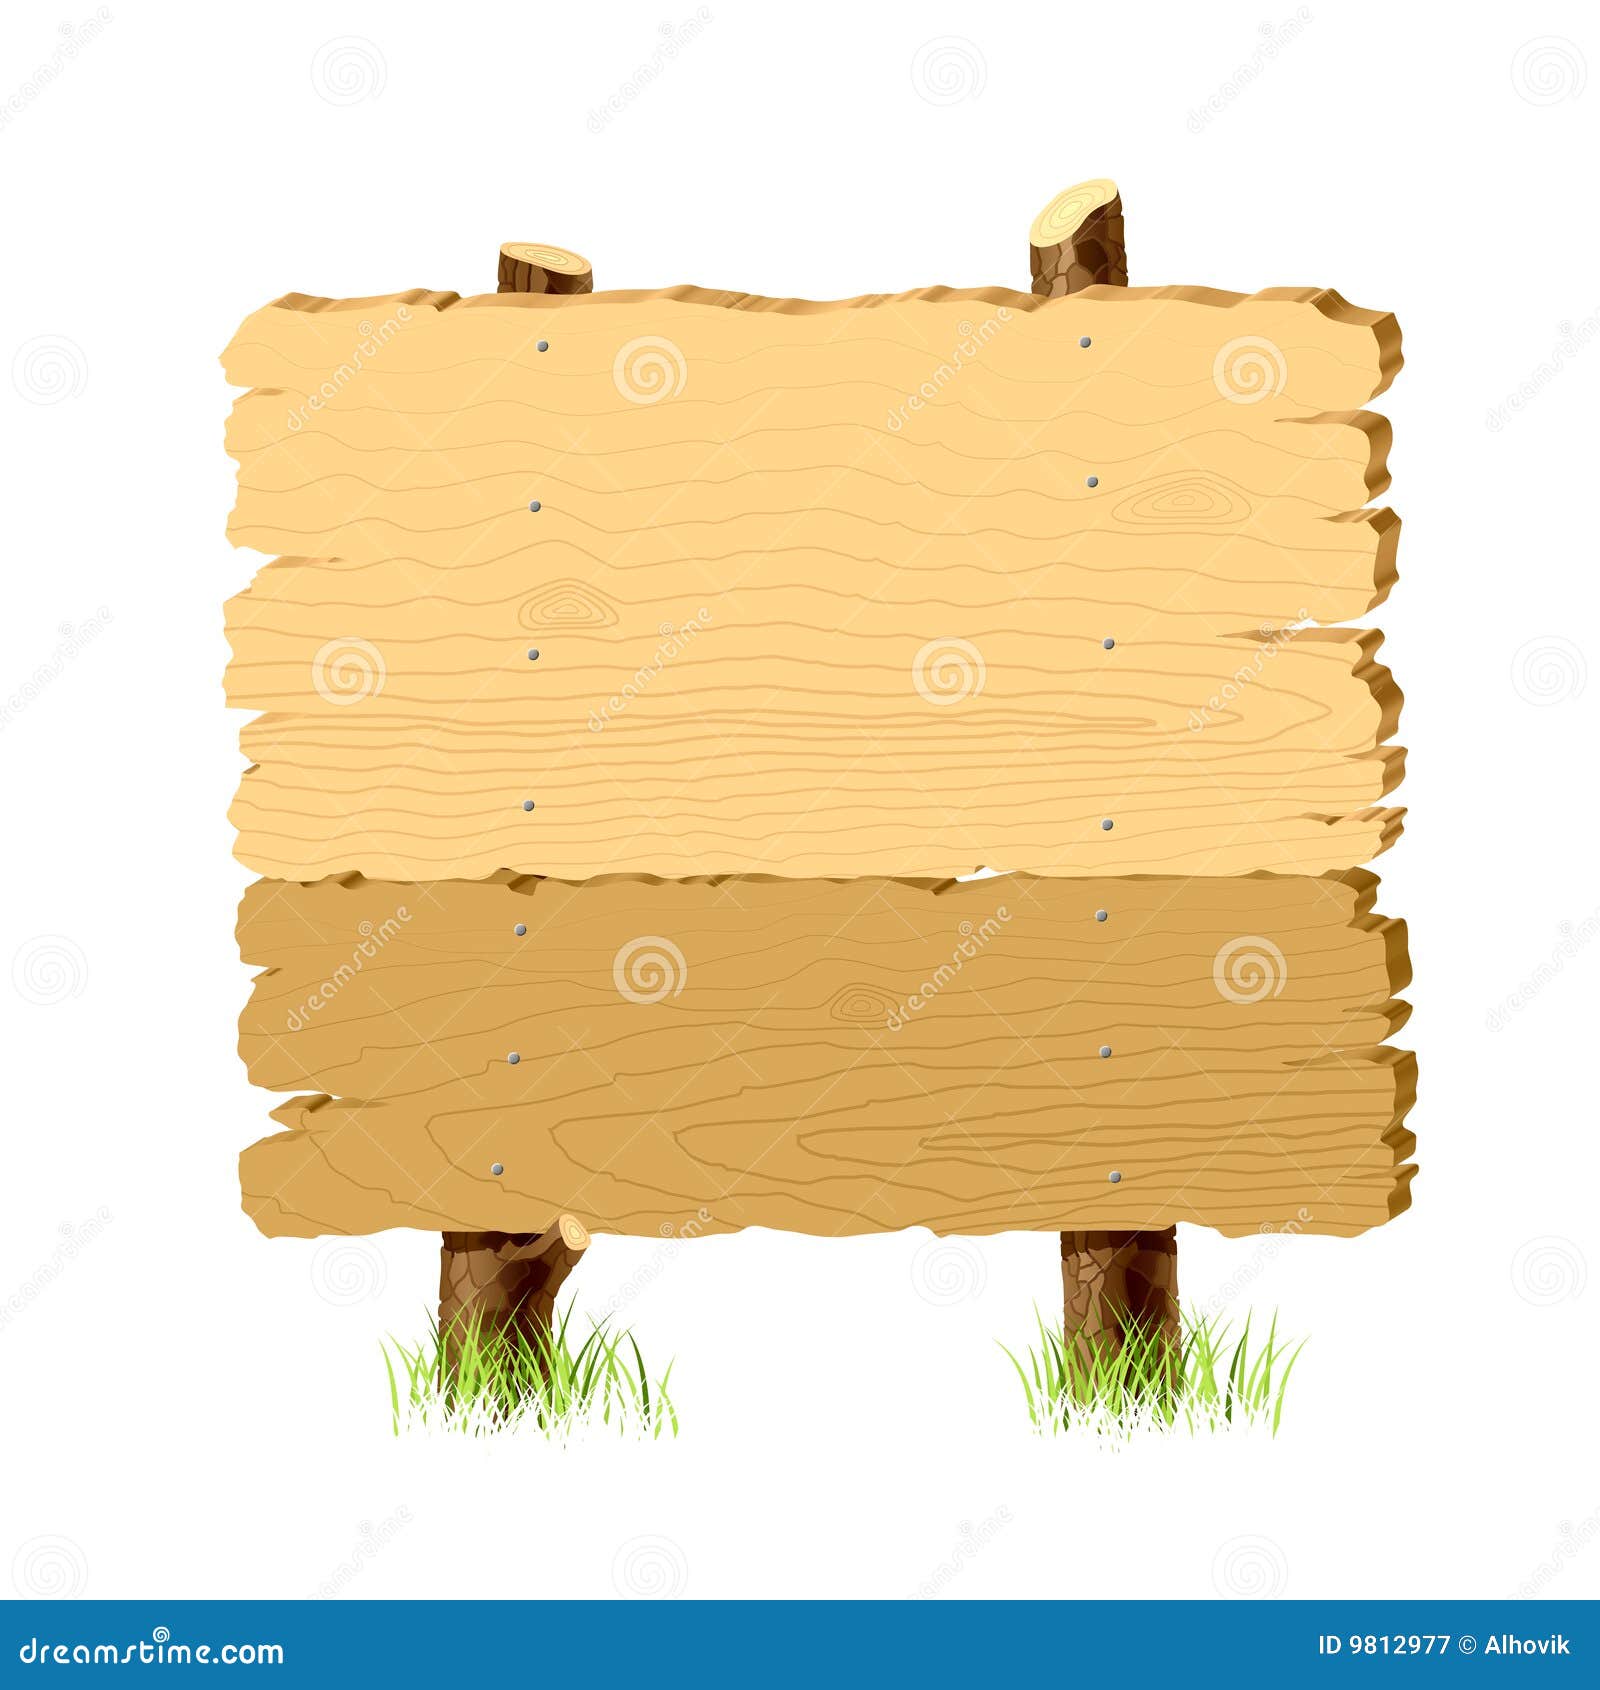 wooden signboard